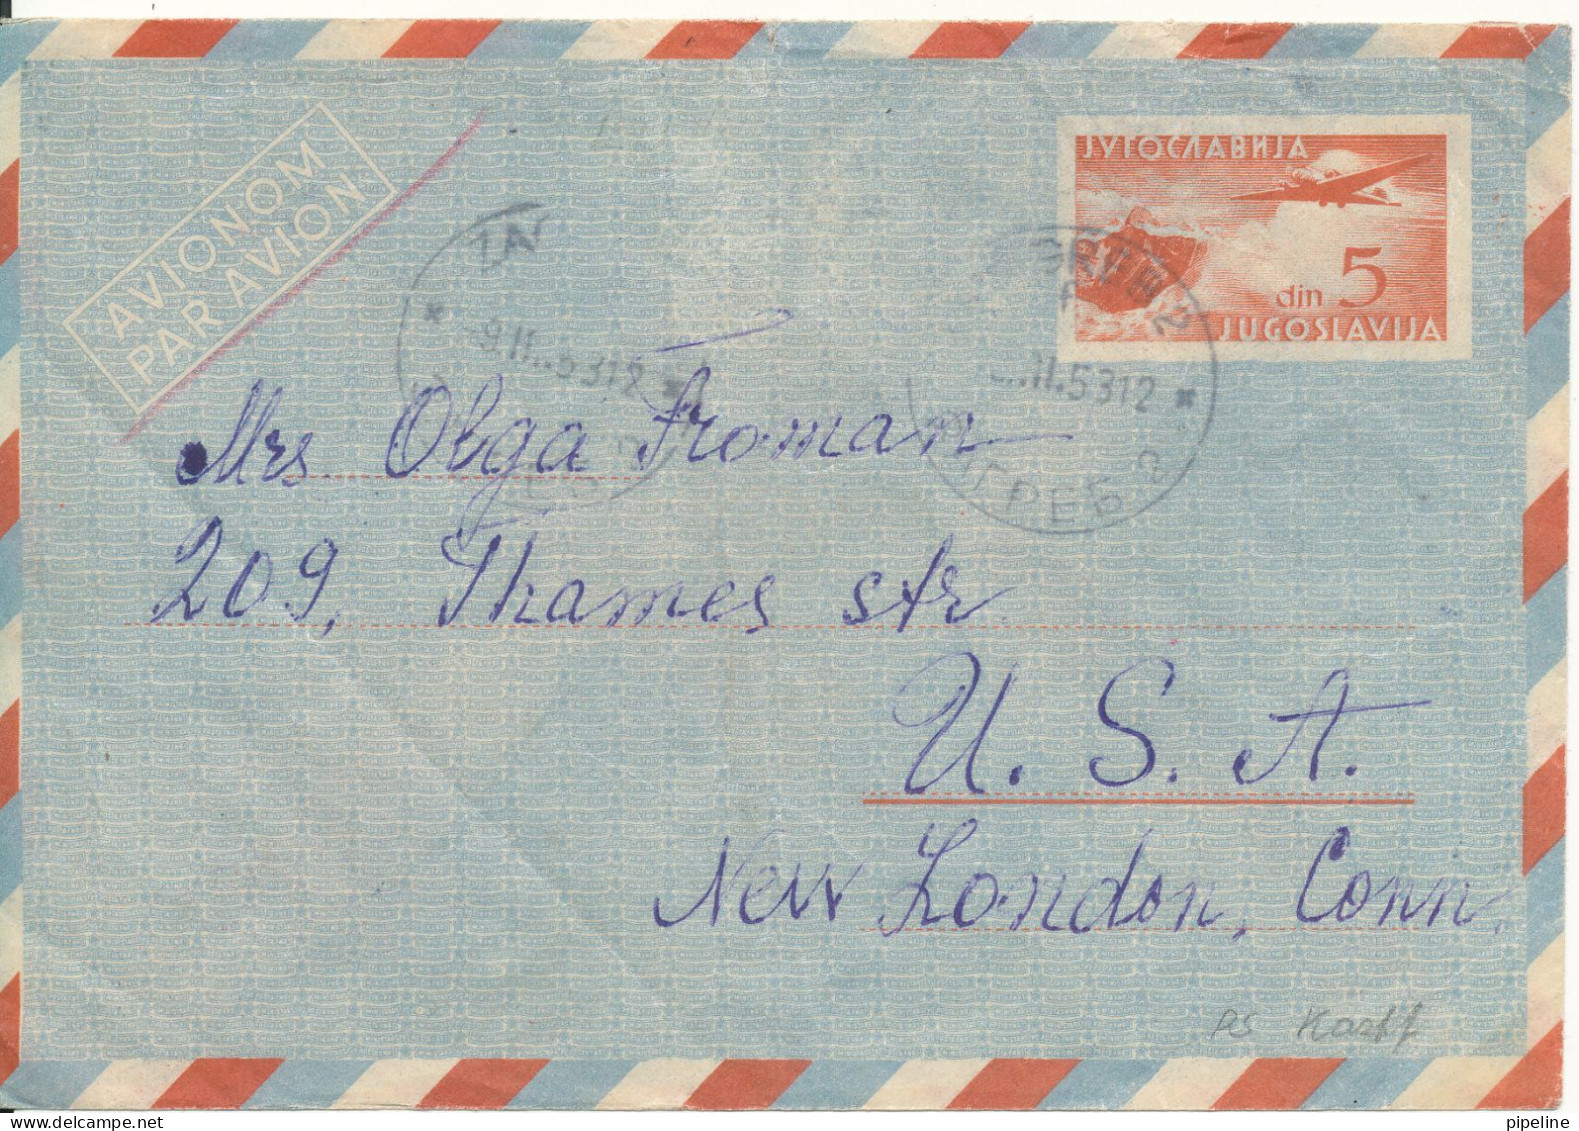 Yugoslavia Postal Stationery Cover Sent To USA Zagreb 9-11-1953 - Entiers Postaux